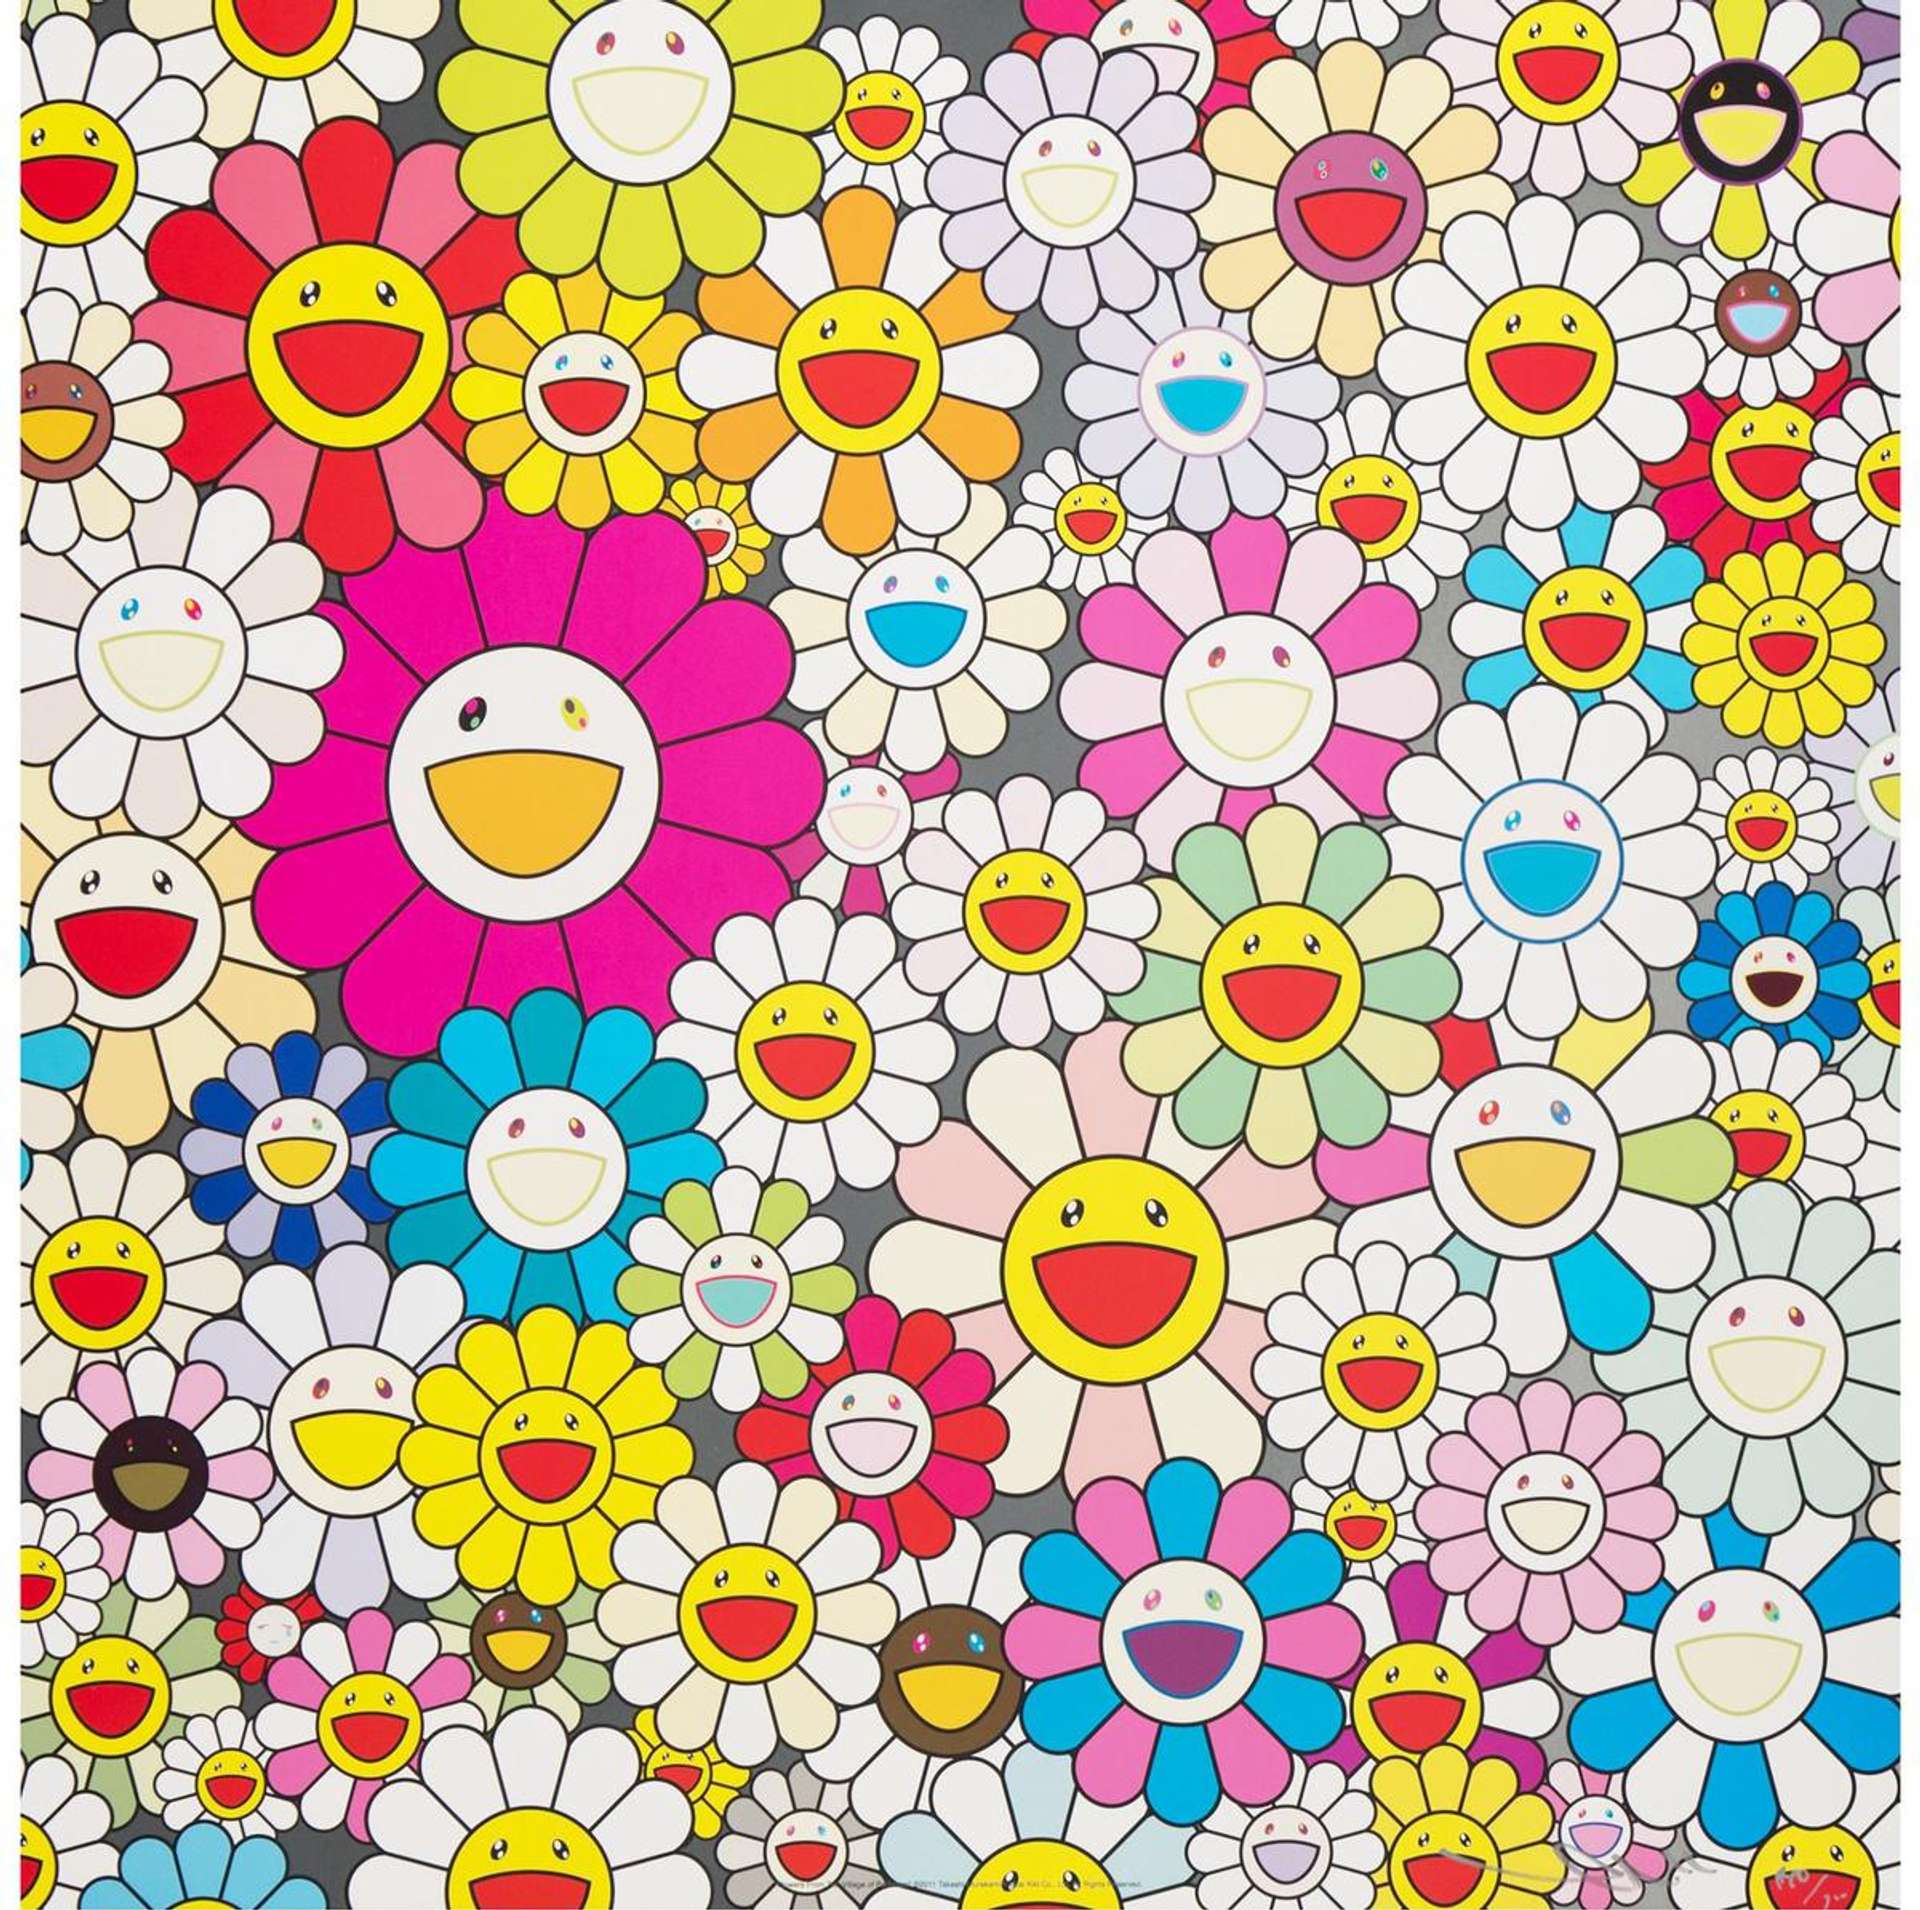 Flowers From The Village Of Ponkotan - Signed Print by Takashi Murakami 2011 - MyArtBroker